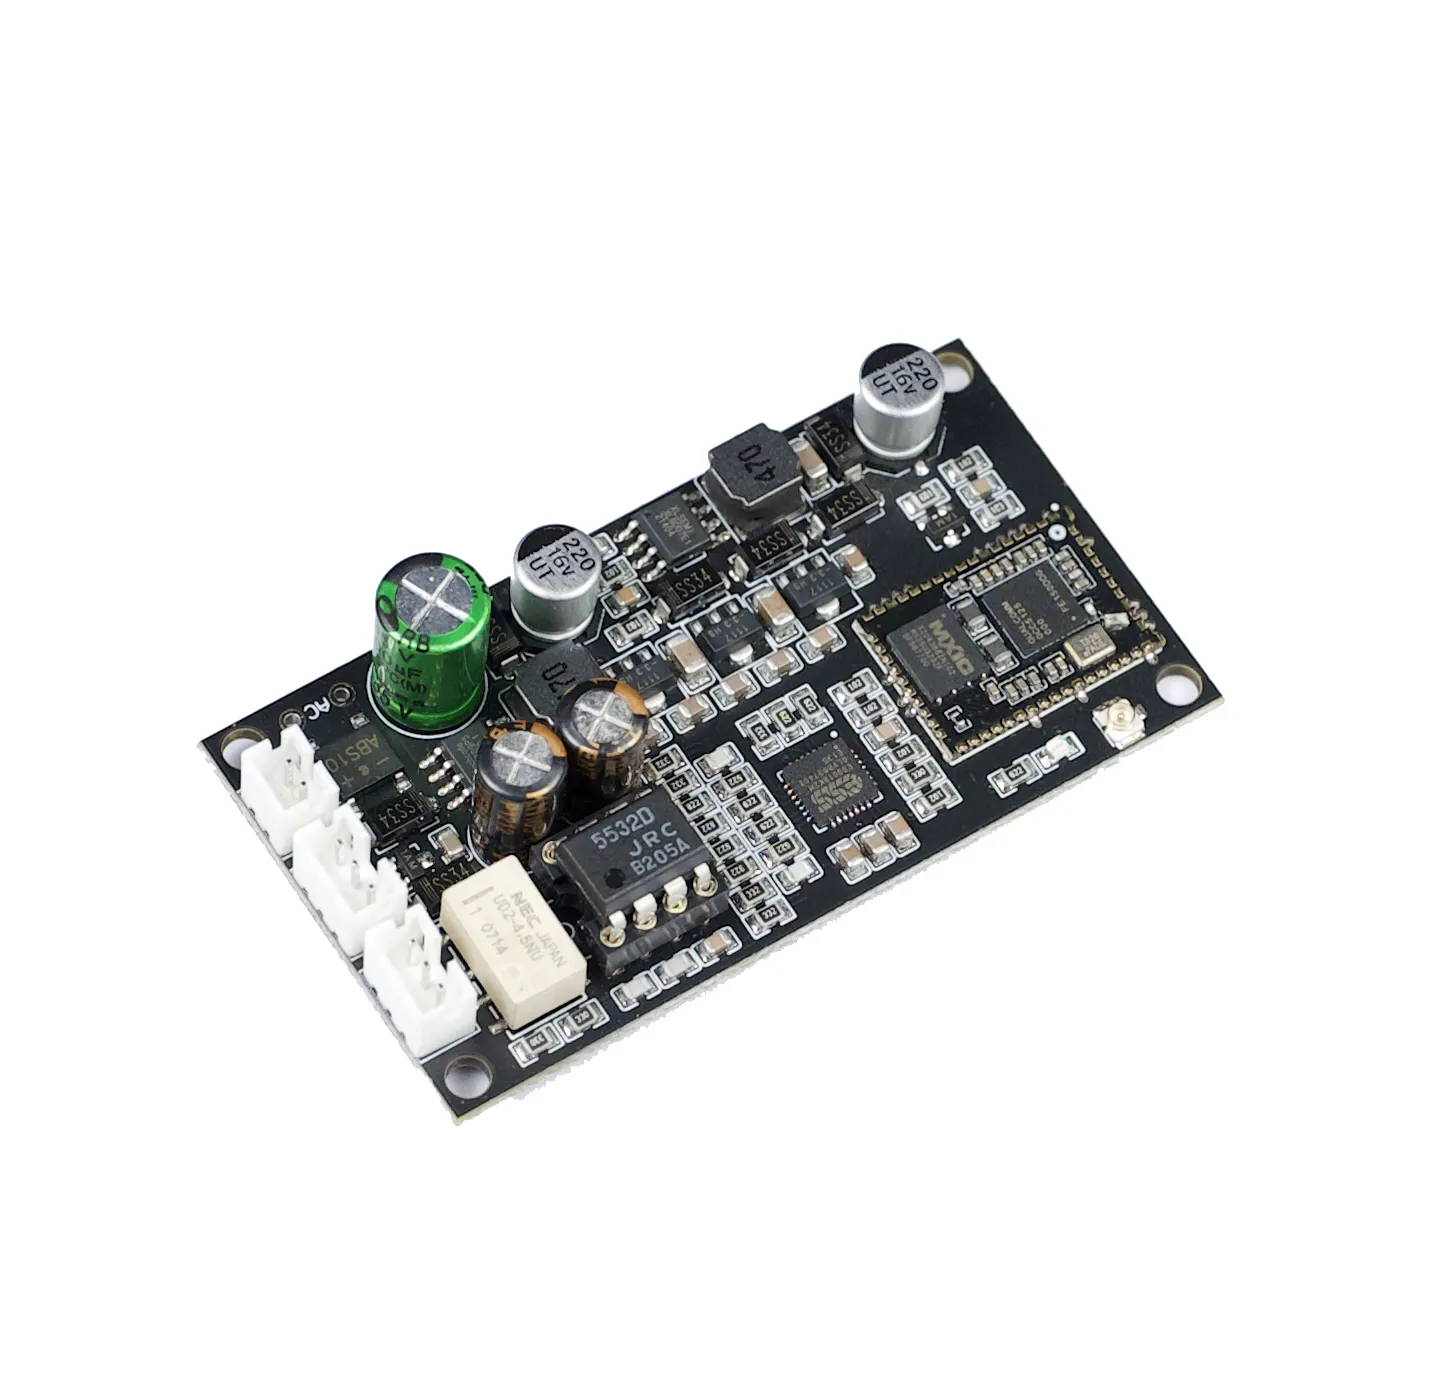 Packbox amplificador qcc5125 pro ldac 5.1 sem lossless, hifi, receptor de áudio bluetooth, placa dac para casa e carro